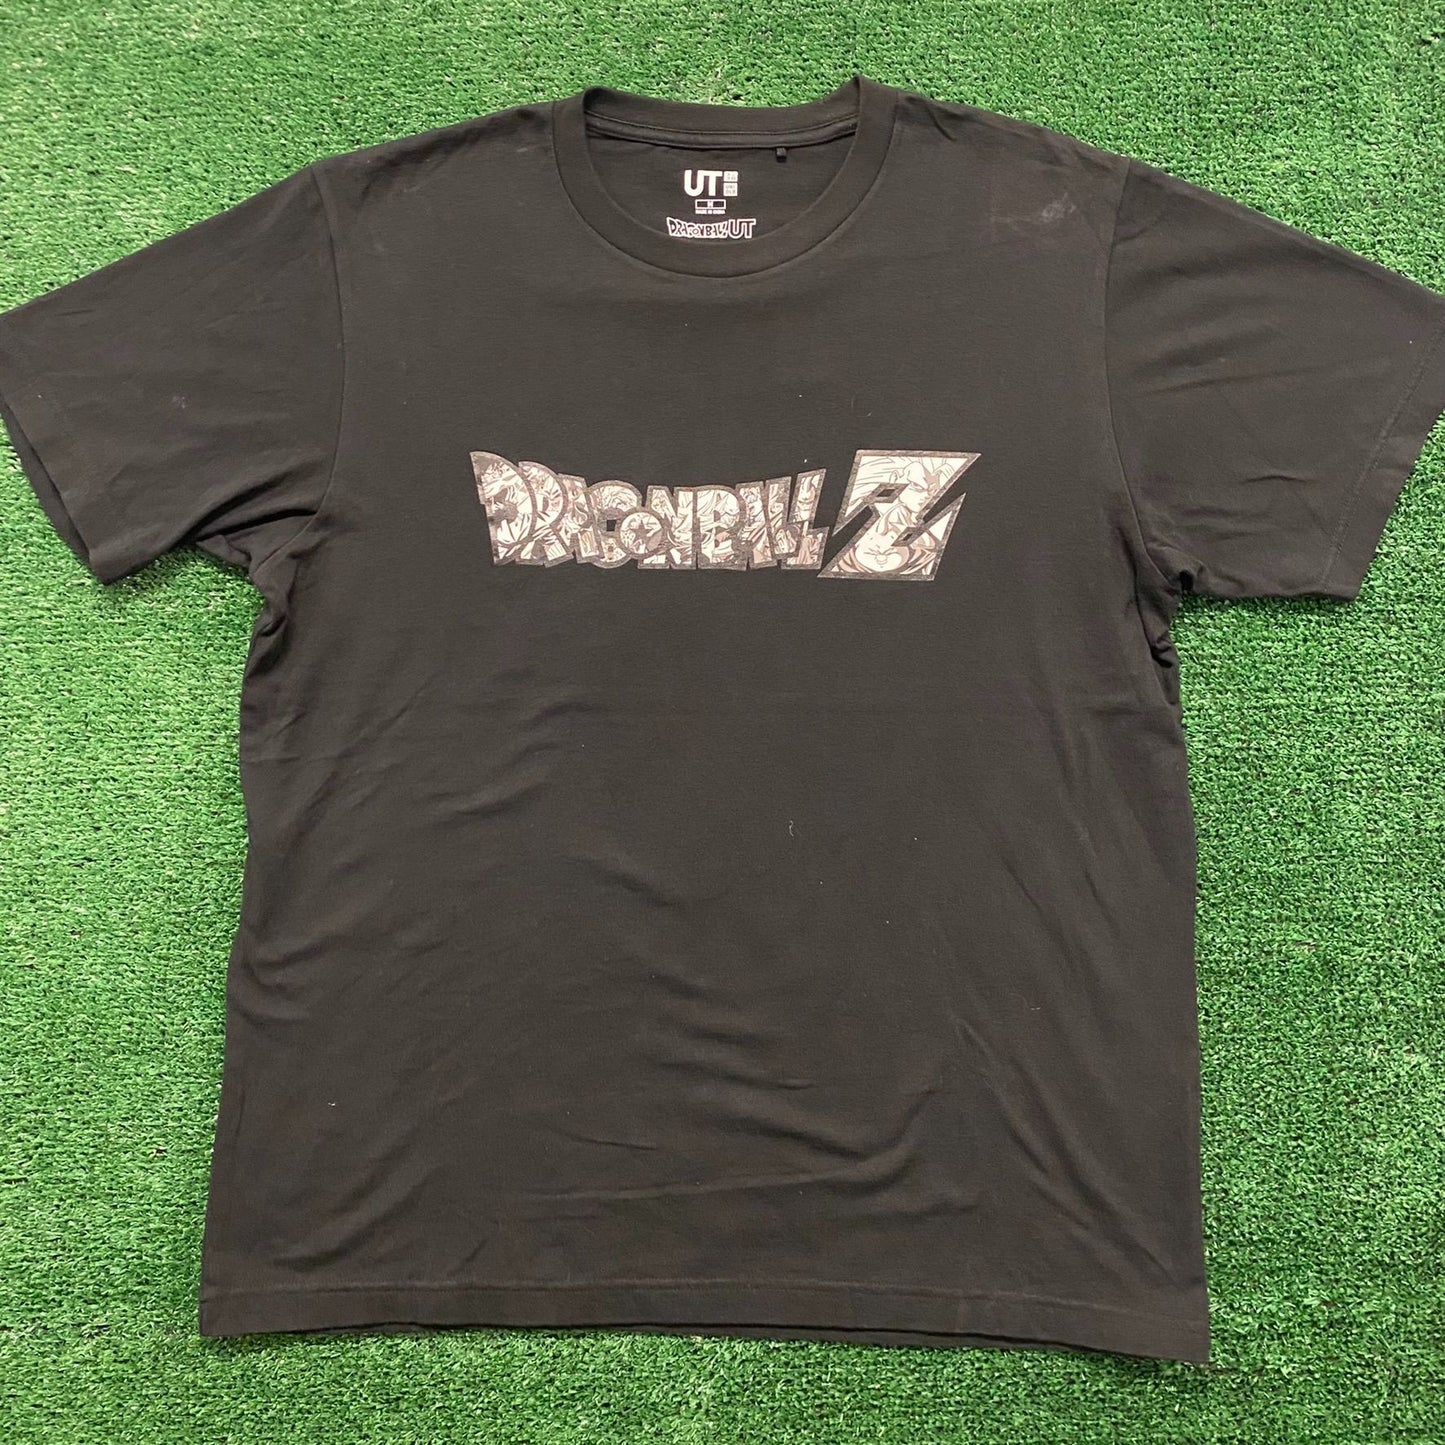 Uniqlo Dragonball Z Vintage Anime T-Shirt